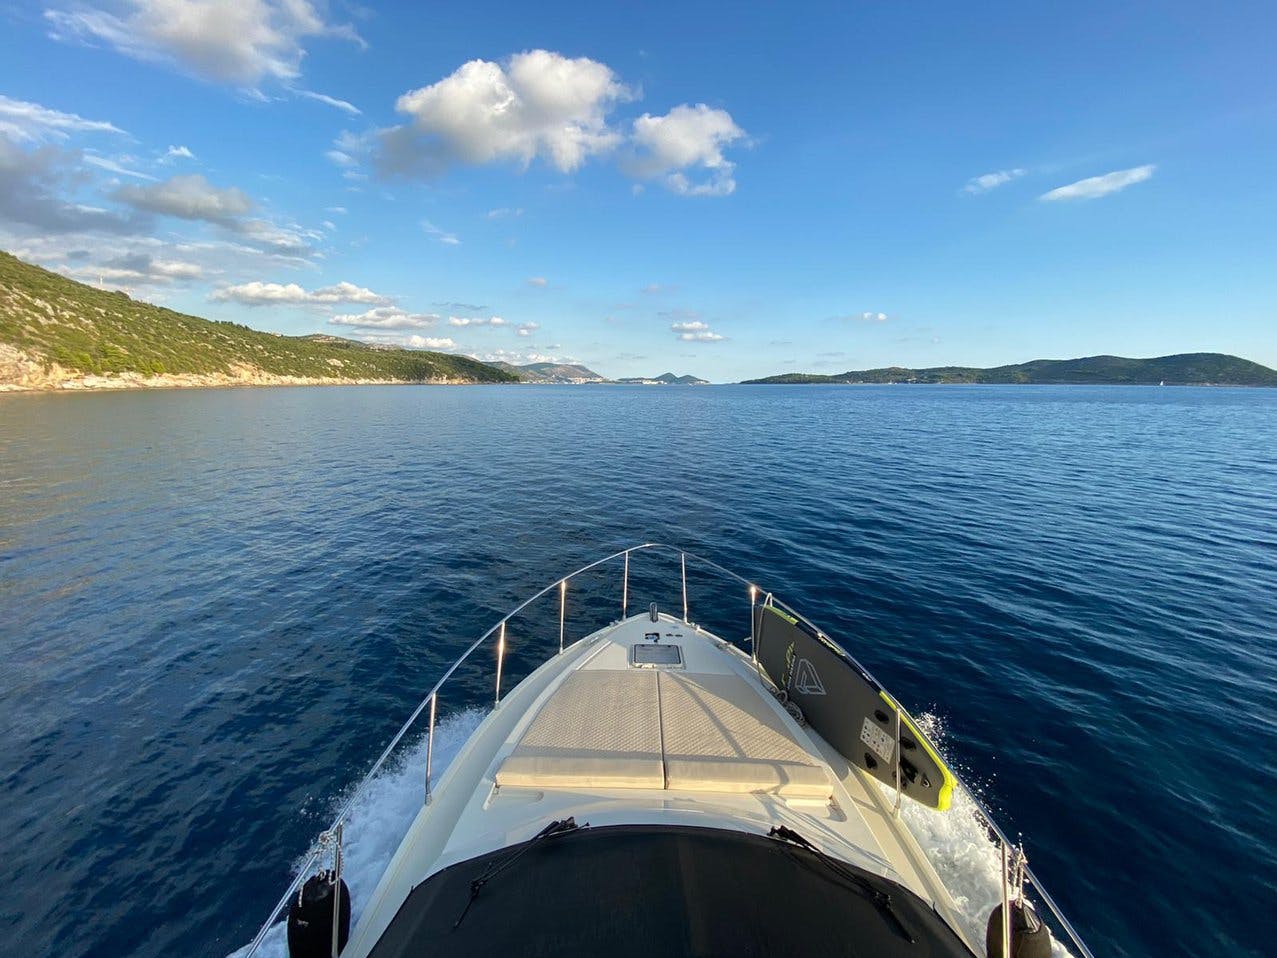 Book Ferretti Fly 43 Motor boat for bareboat charter in Dubrovnik, Gruž, Dubrovnik region, Croatia with TripYacht!, picture 3